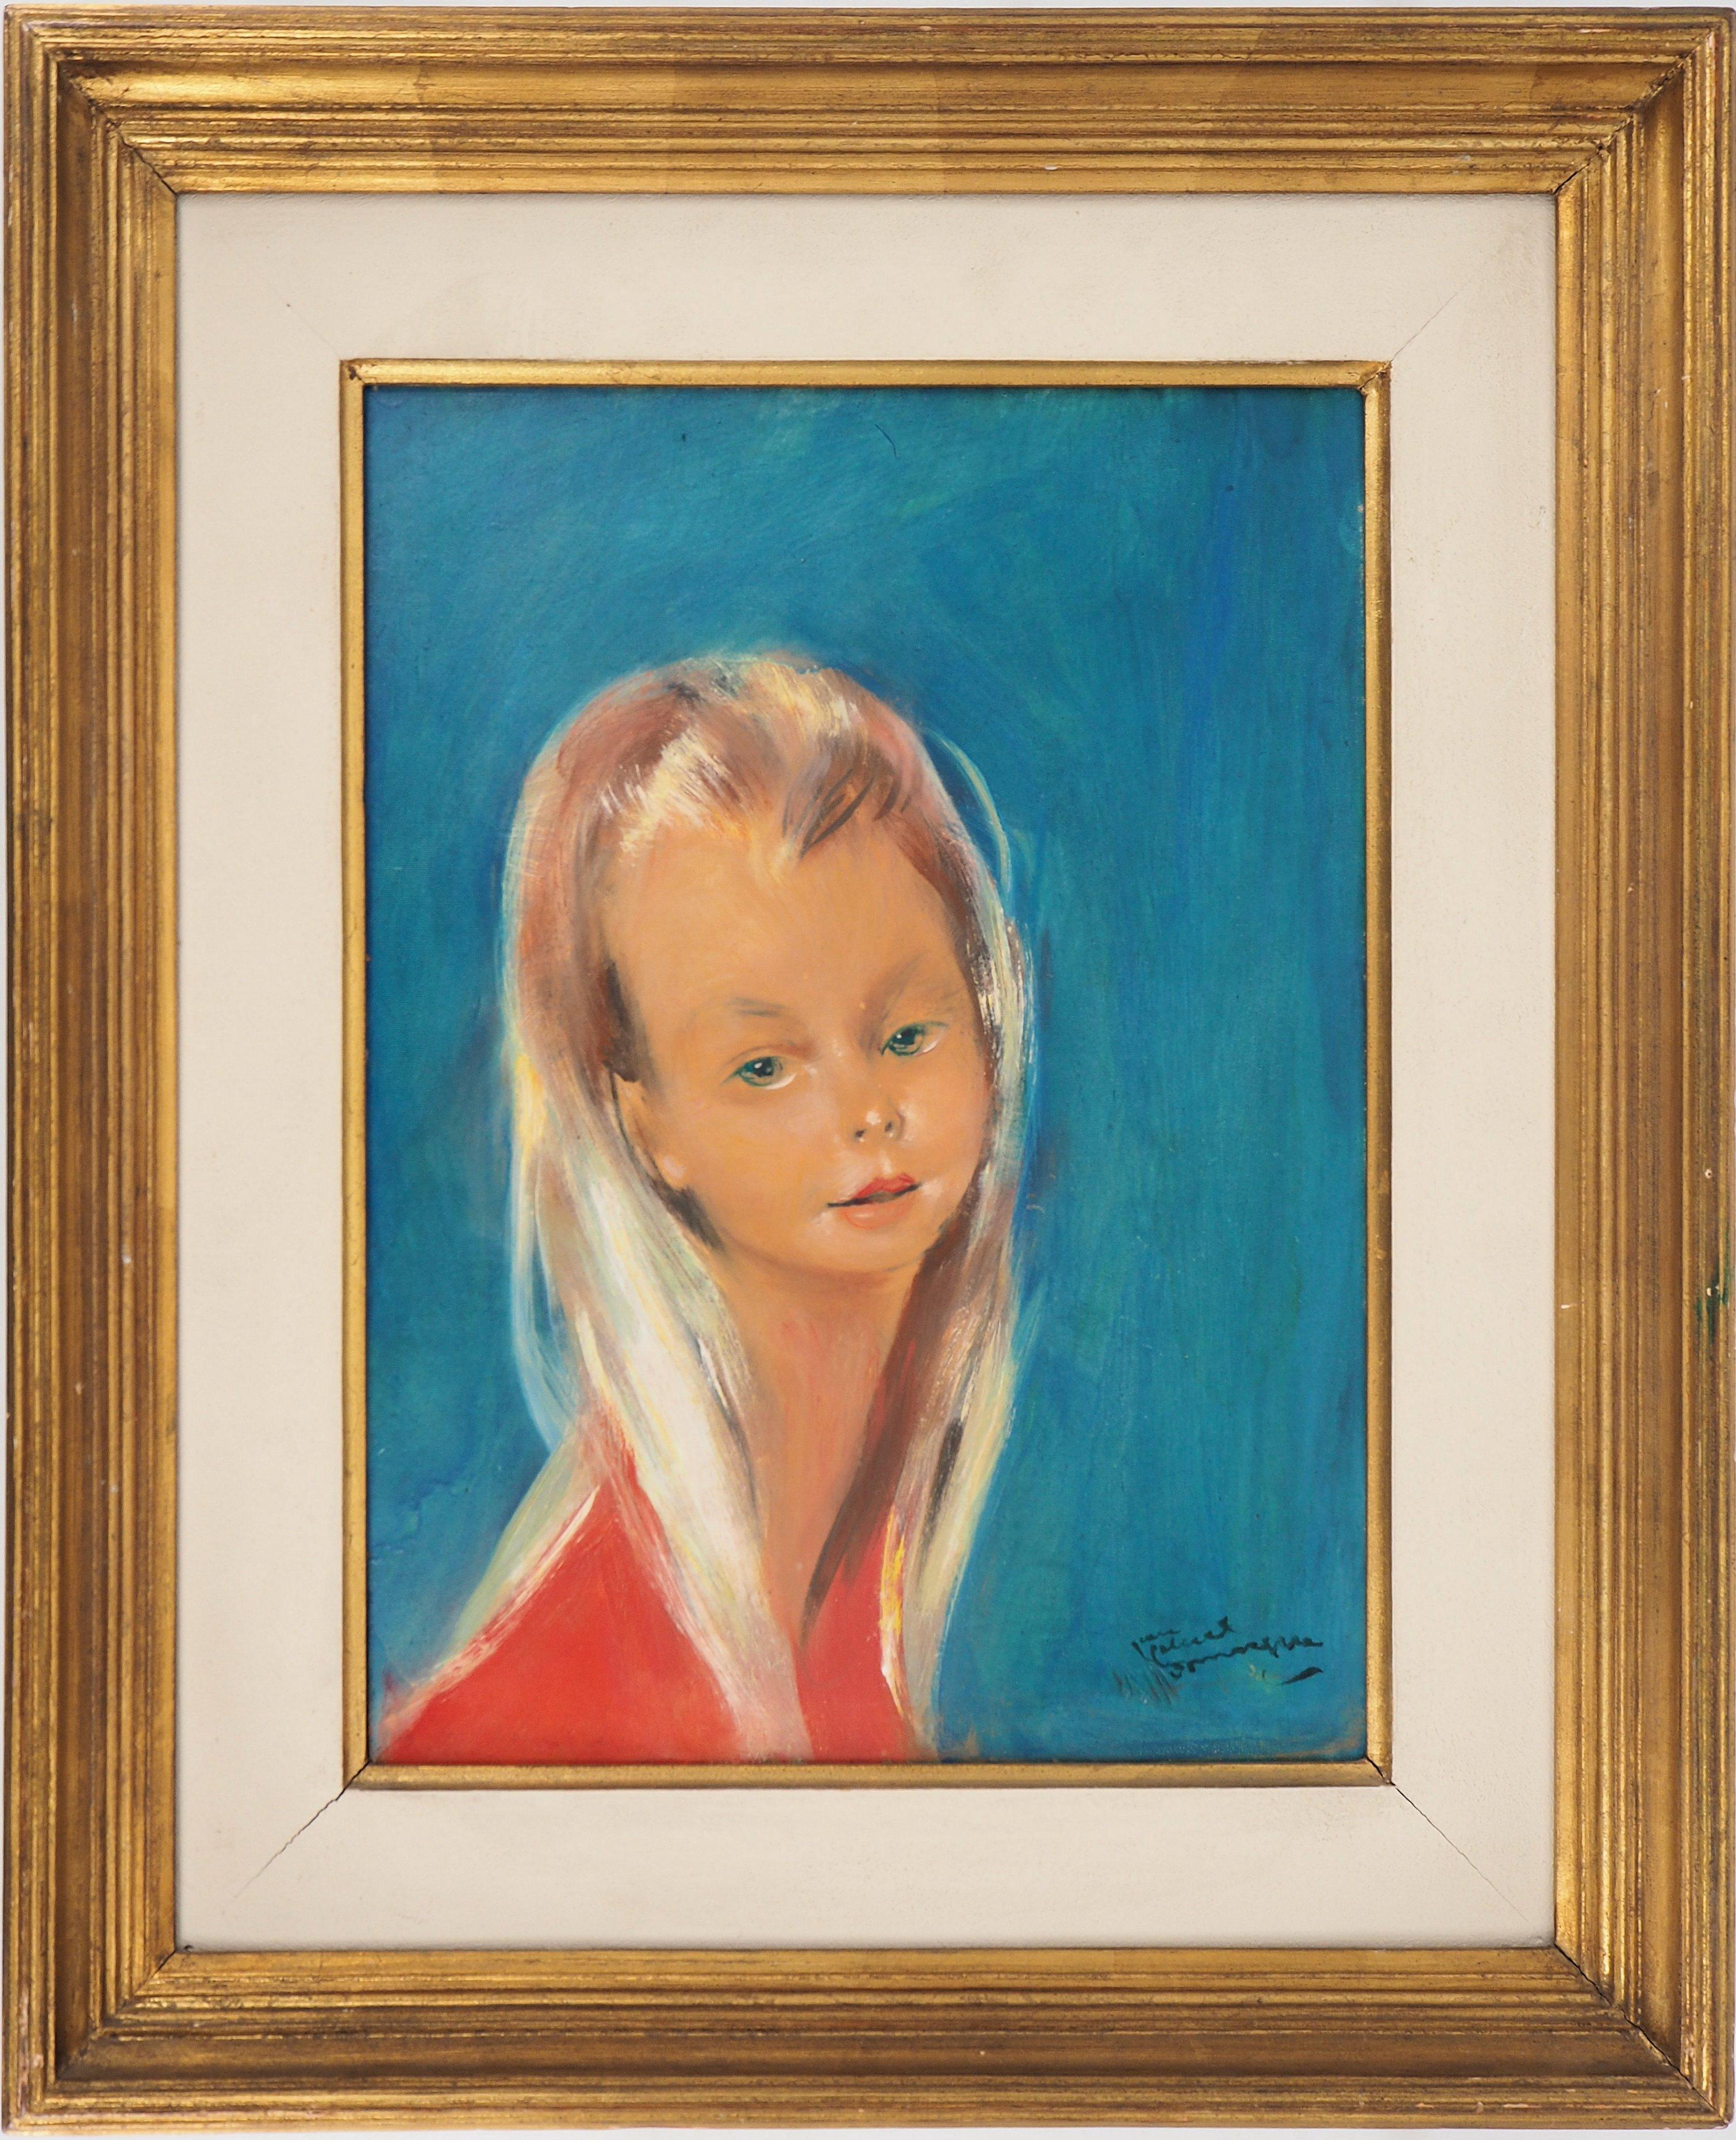 Jean-Gabriel Domergue Portrait Painting - Blond Hair Girl - Original handsigned oil painting